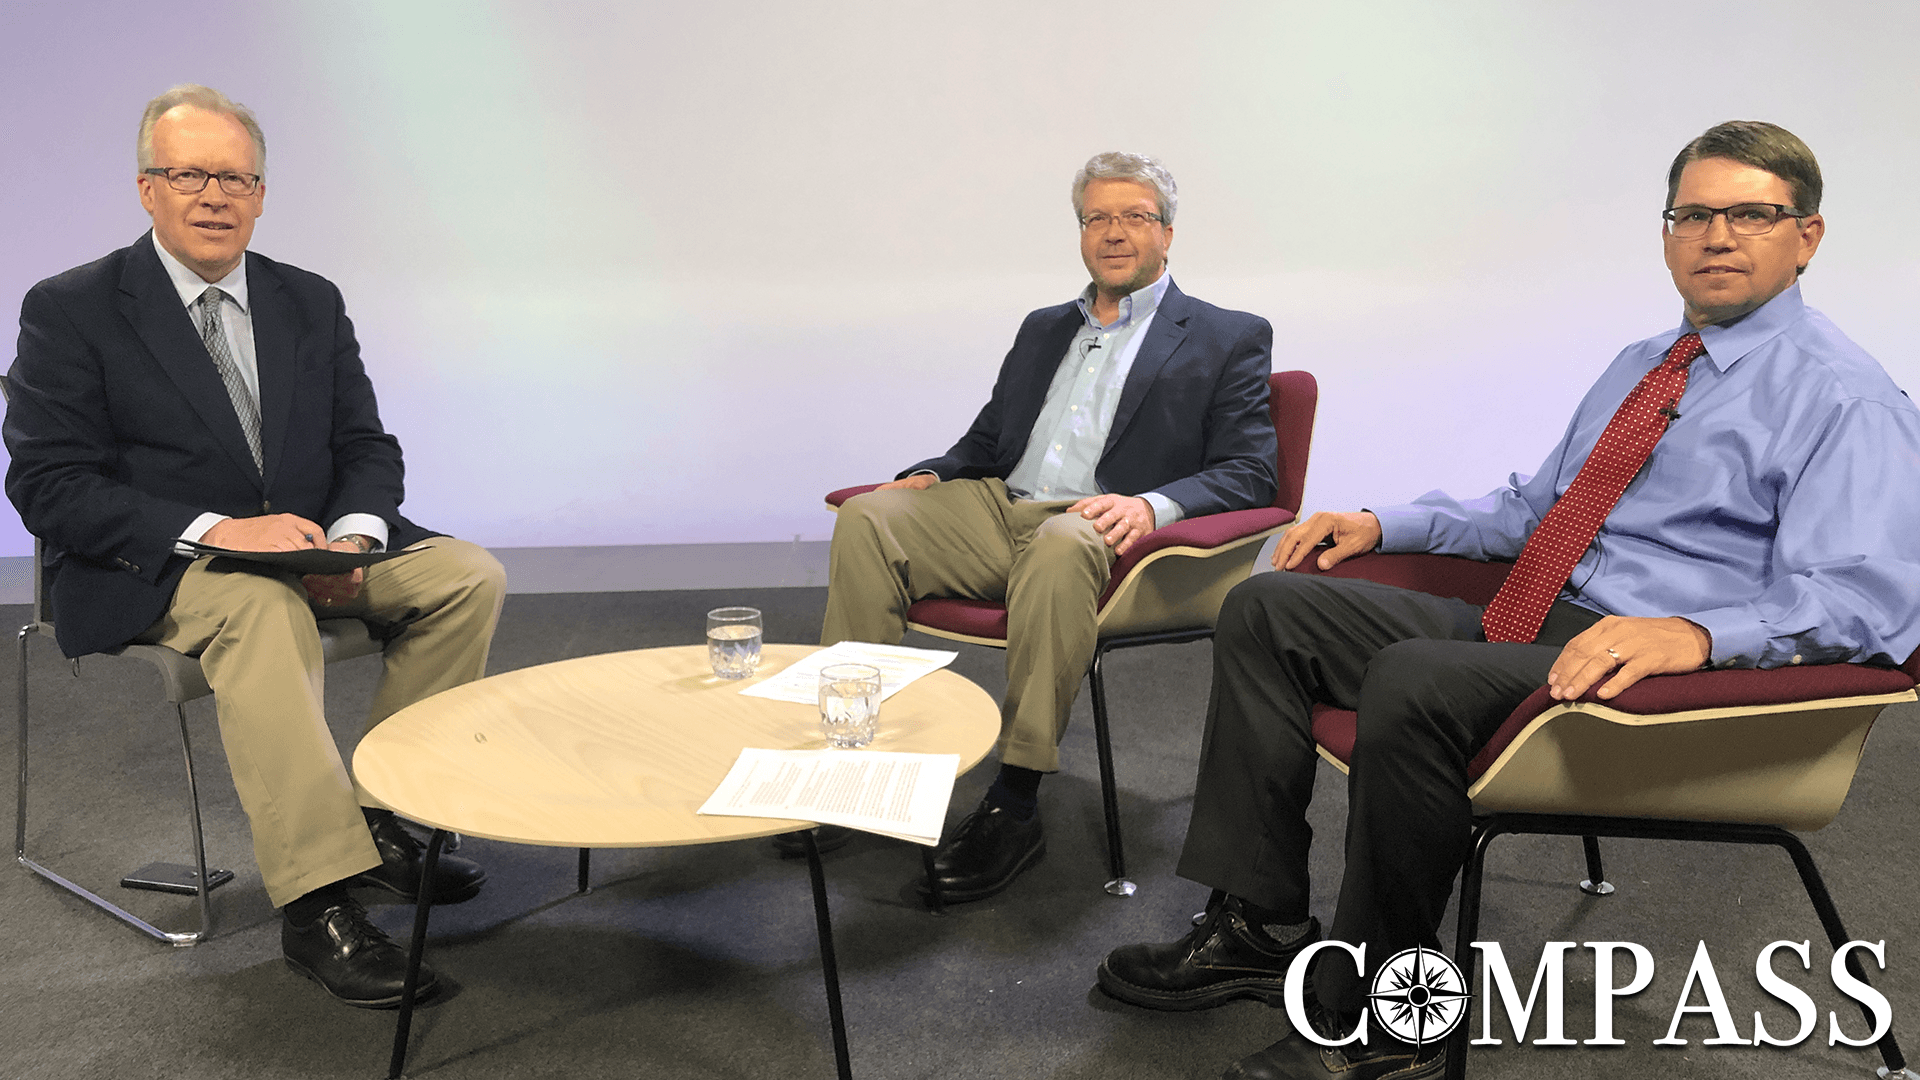 Host Les Heen interviews Jon Huseby and Craig Smith.